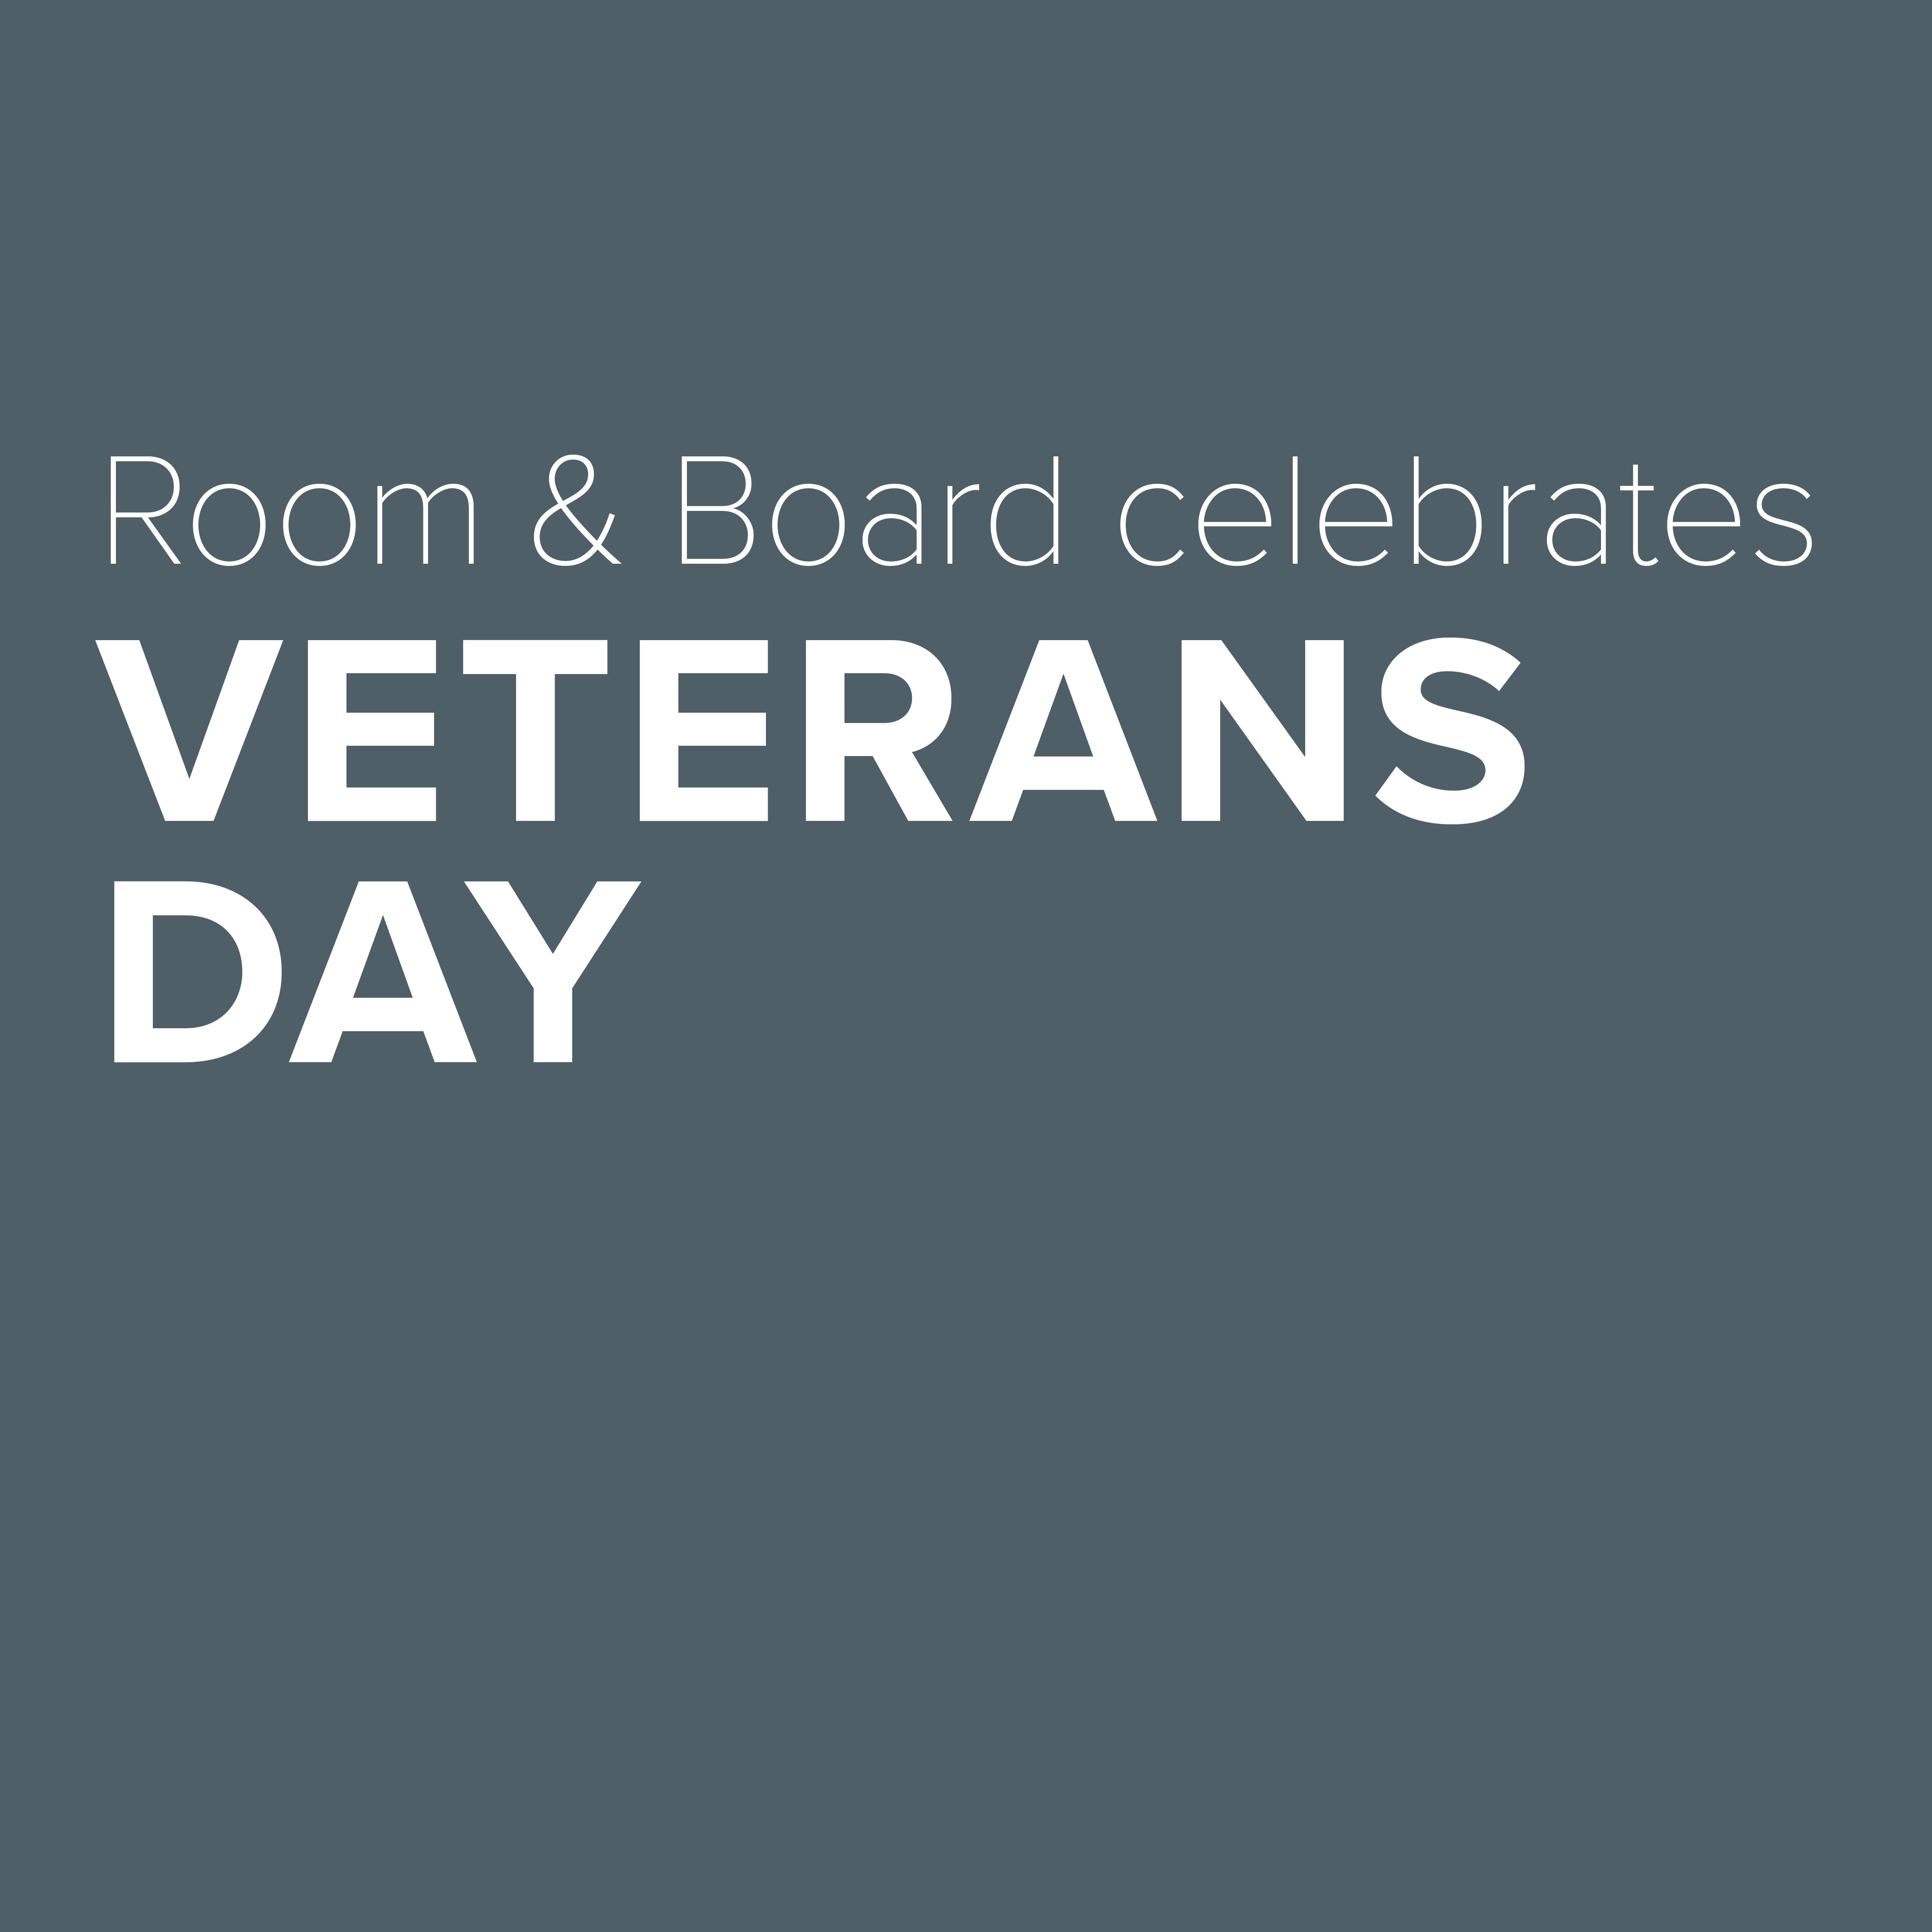 veteran's day text banner